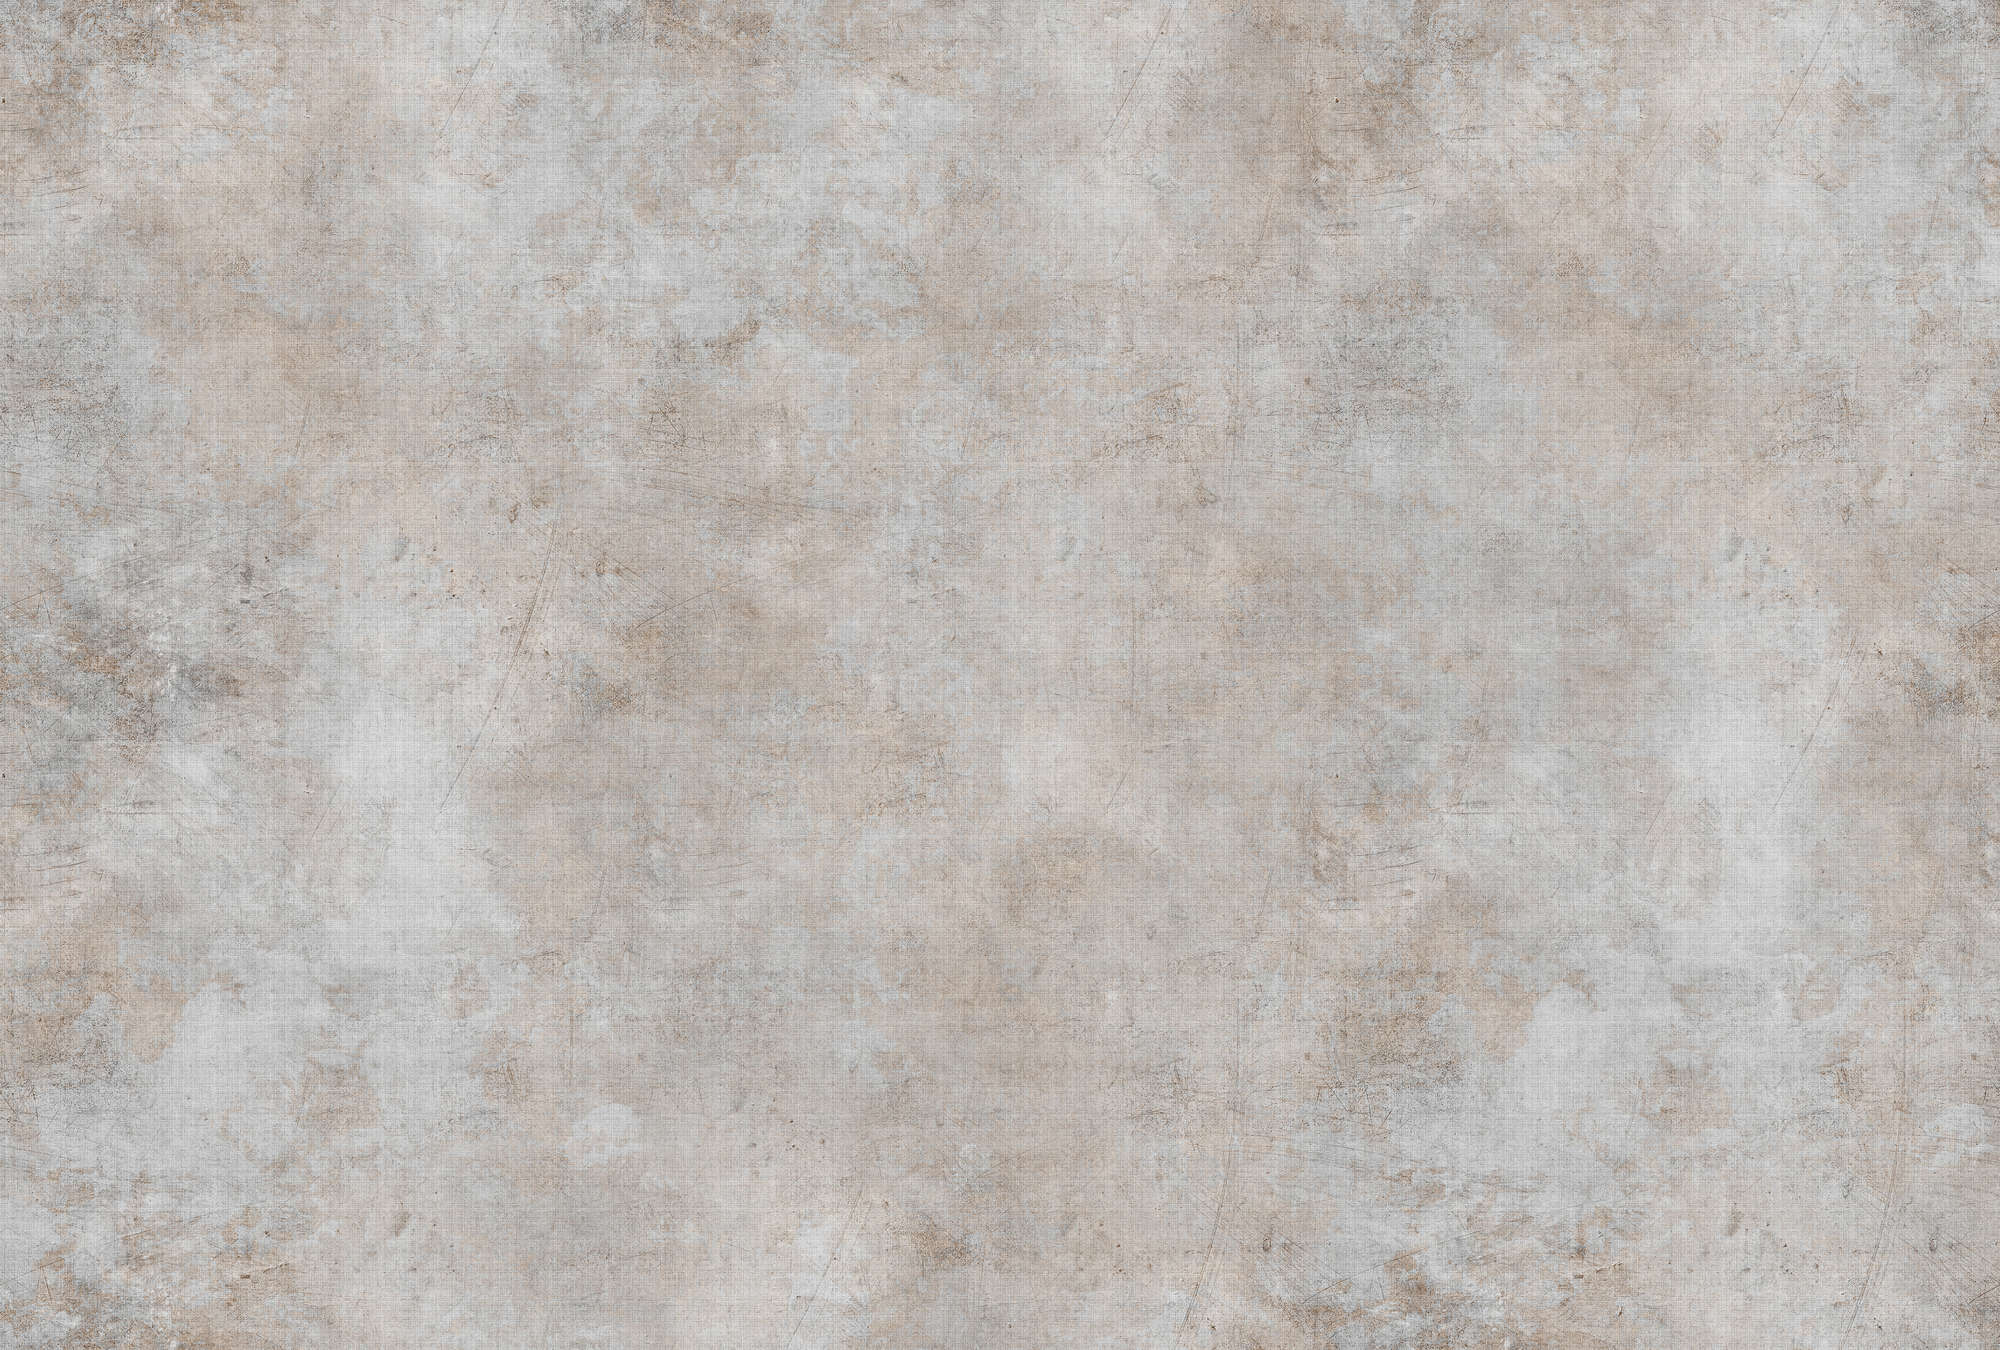             Big three 4 - Concrete and plaster optics as photo wallpaper - natural linen strukutr - Beige, Brown | Premium smooth fleece
        